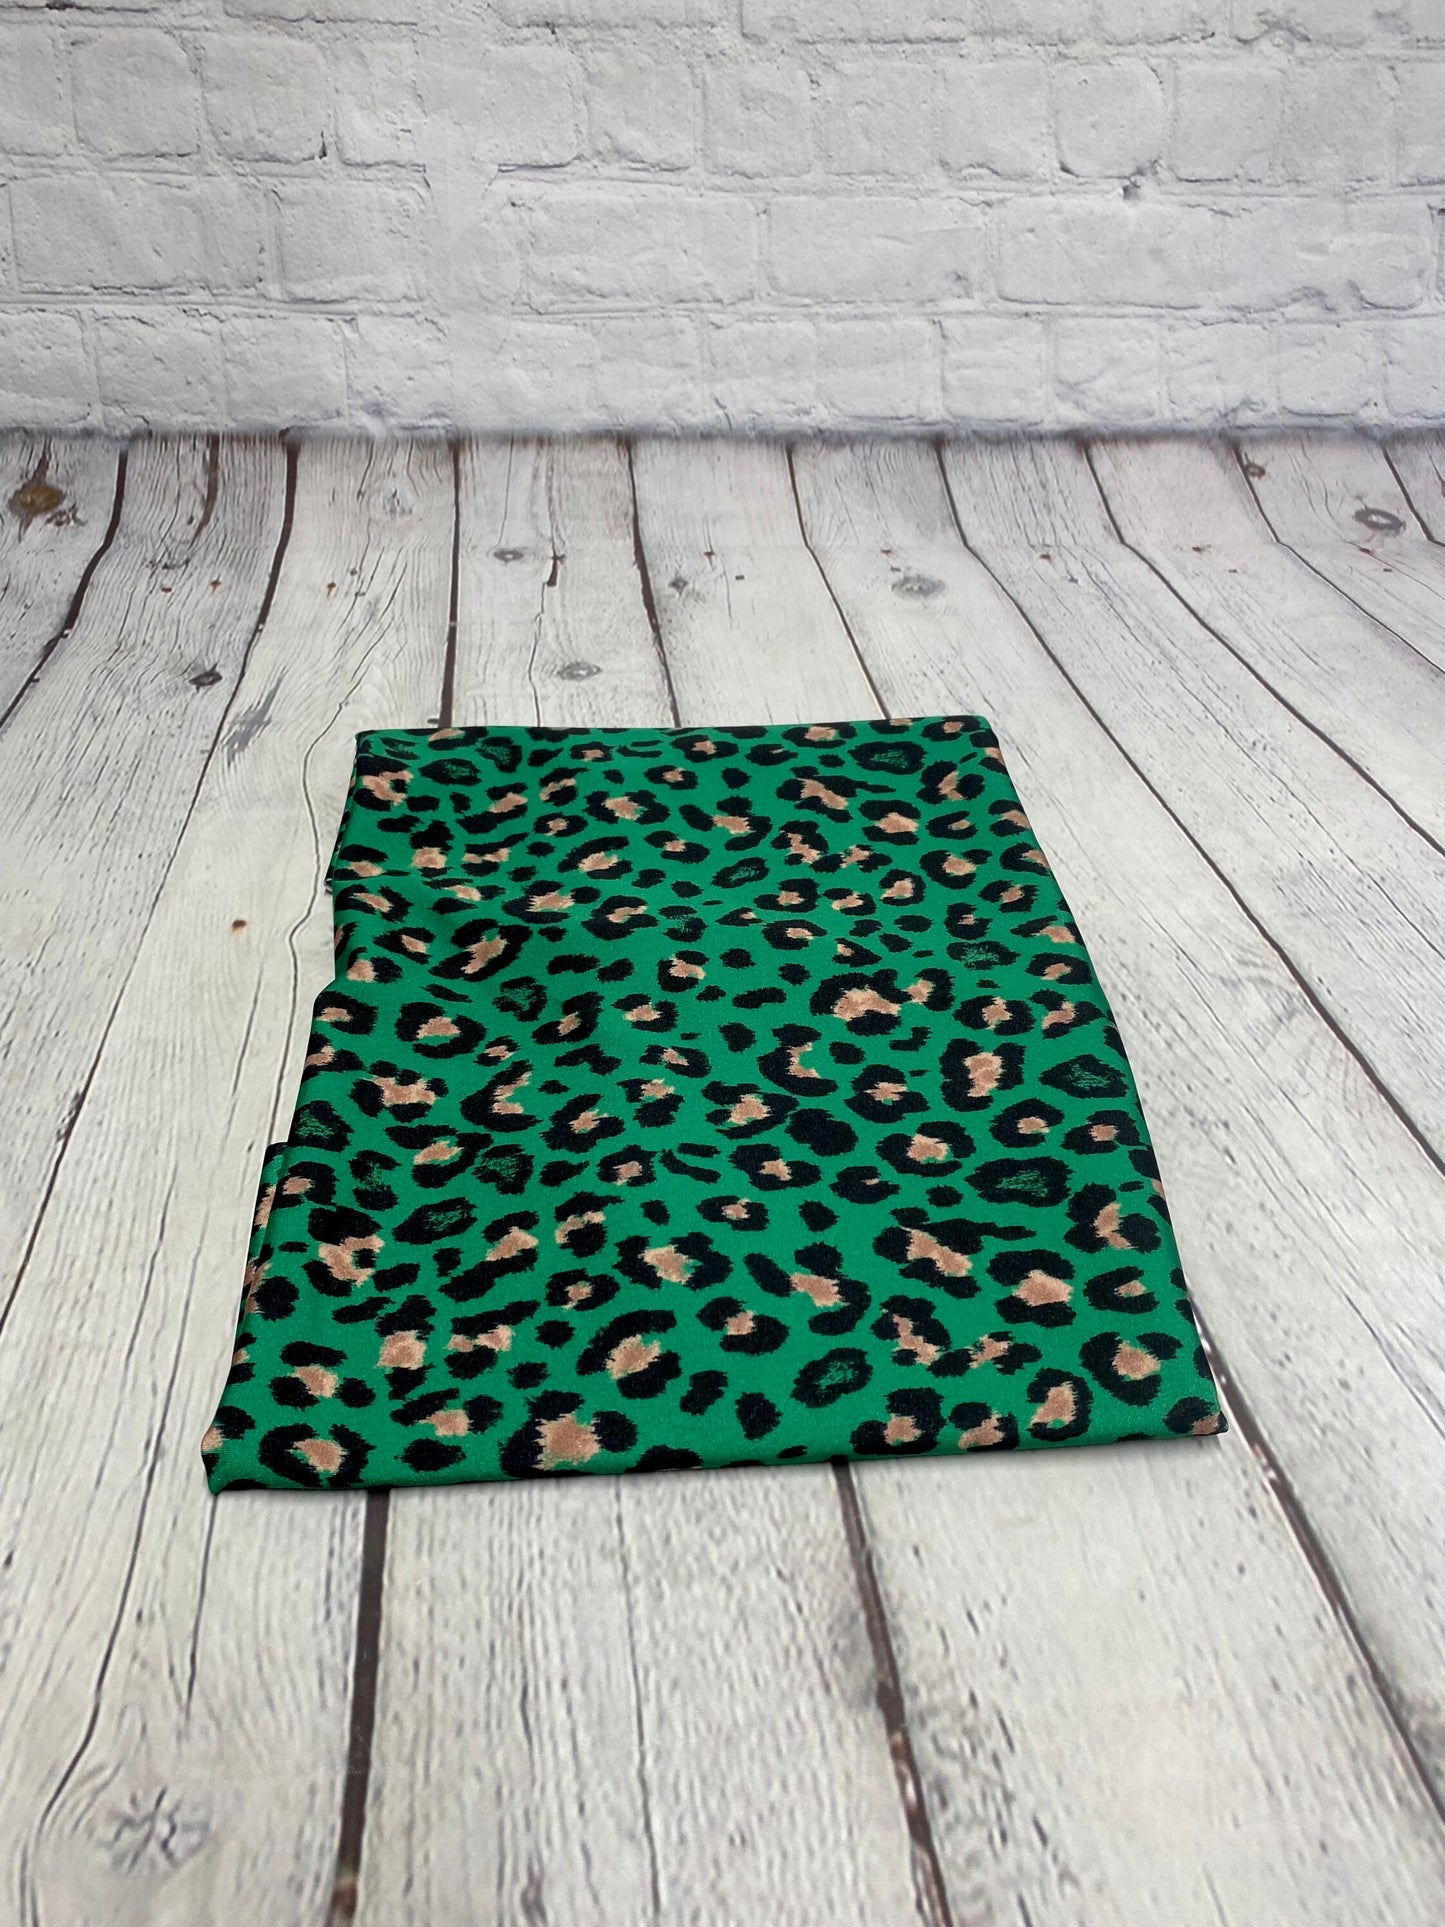 4 Way Stretch Print Nylon Spandex Fabric By The Yard Tricot Swim Wear Bikini Active Wear Green Animal Cheetah Leopard Print 280 GSM